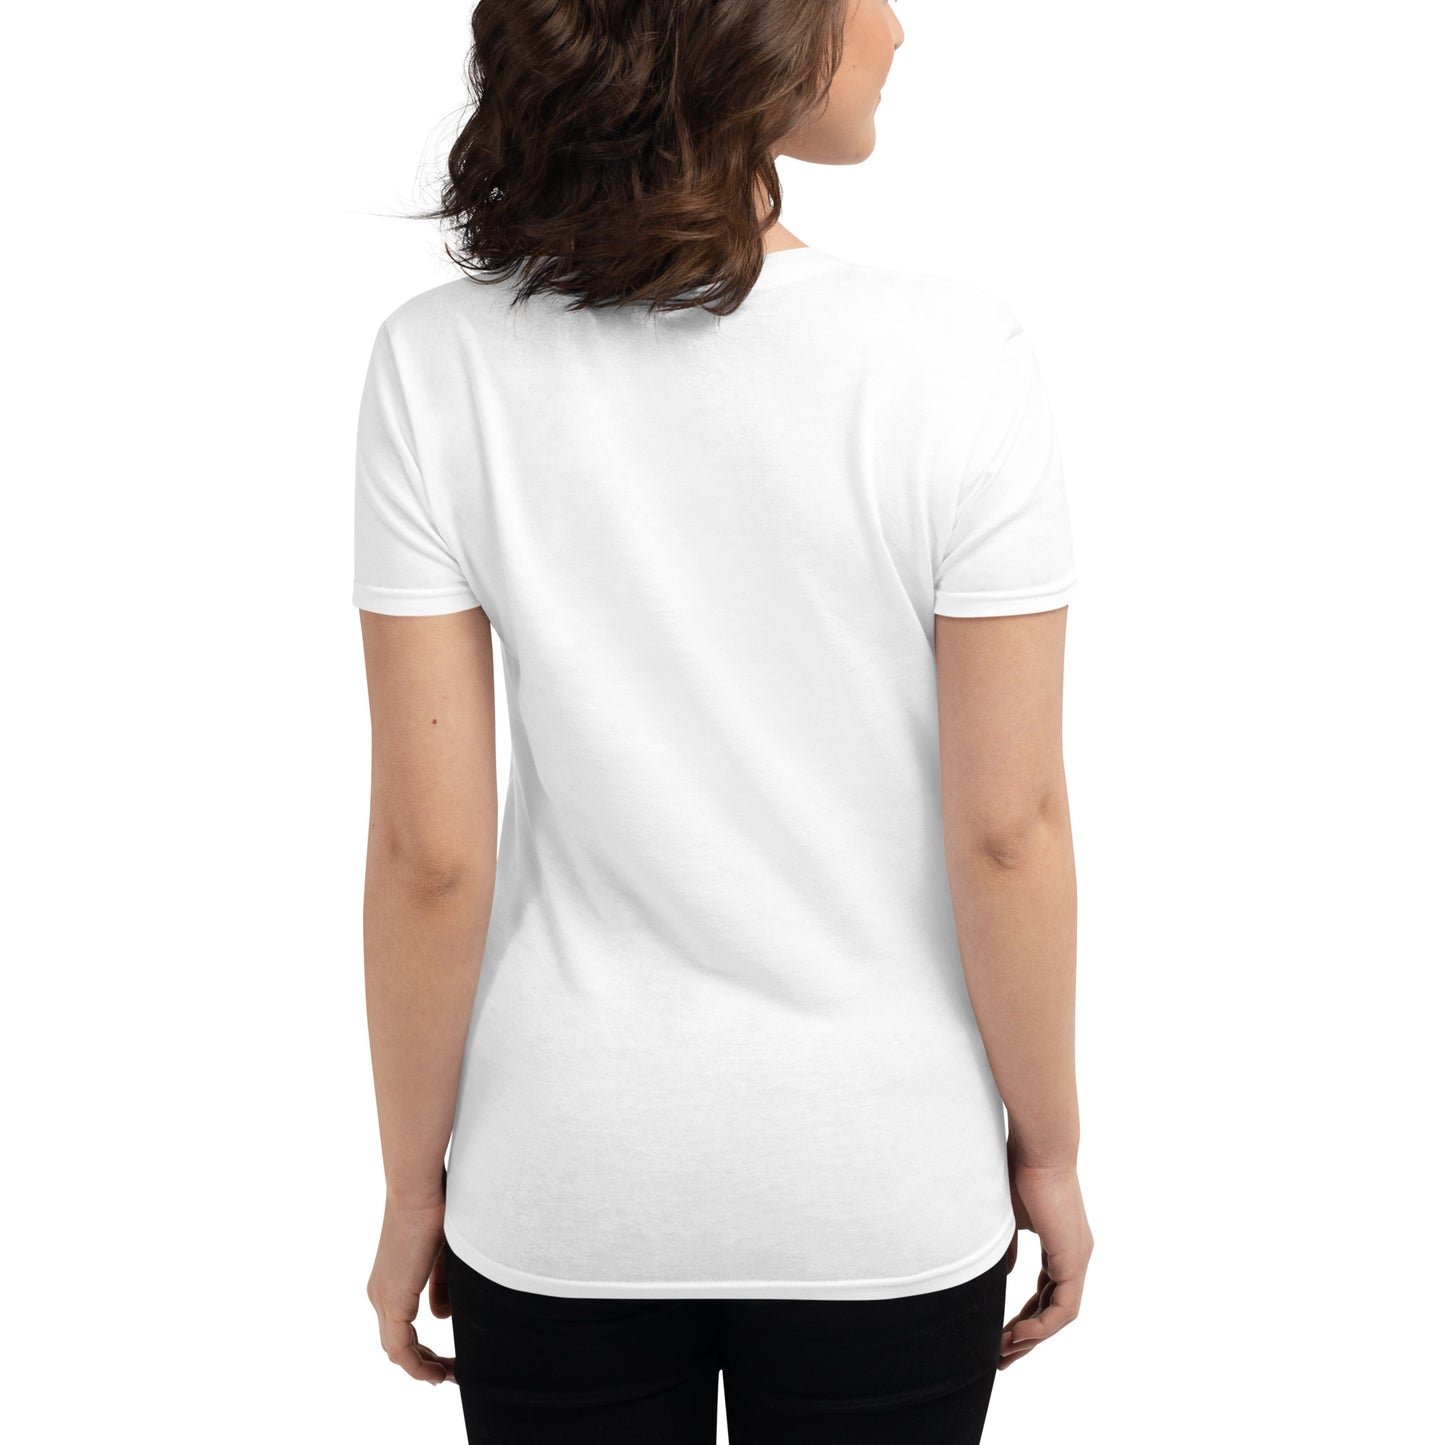 Happiness Women's Short Sleeve T-shirt